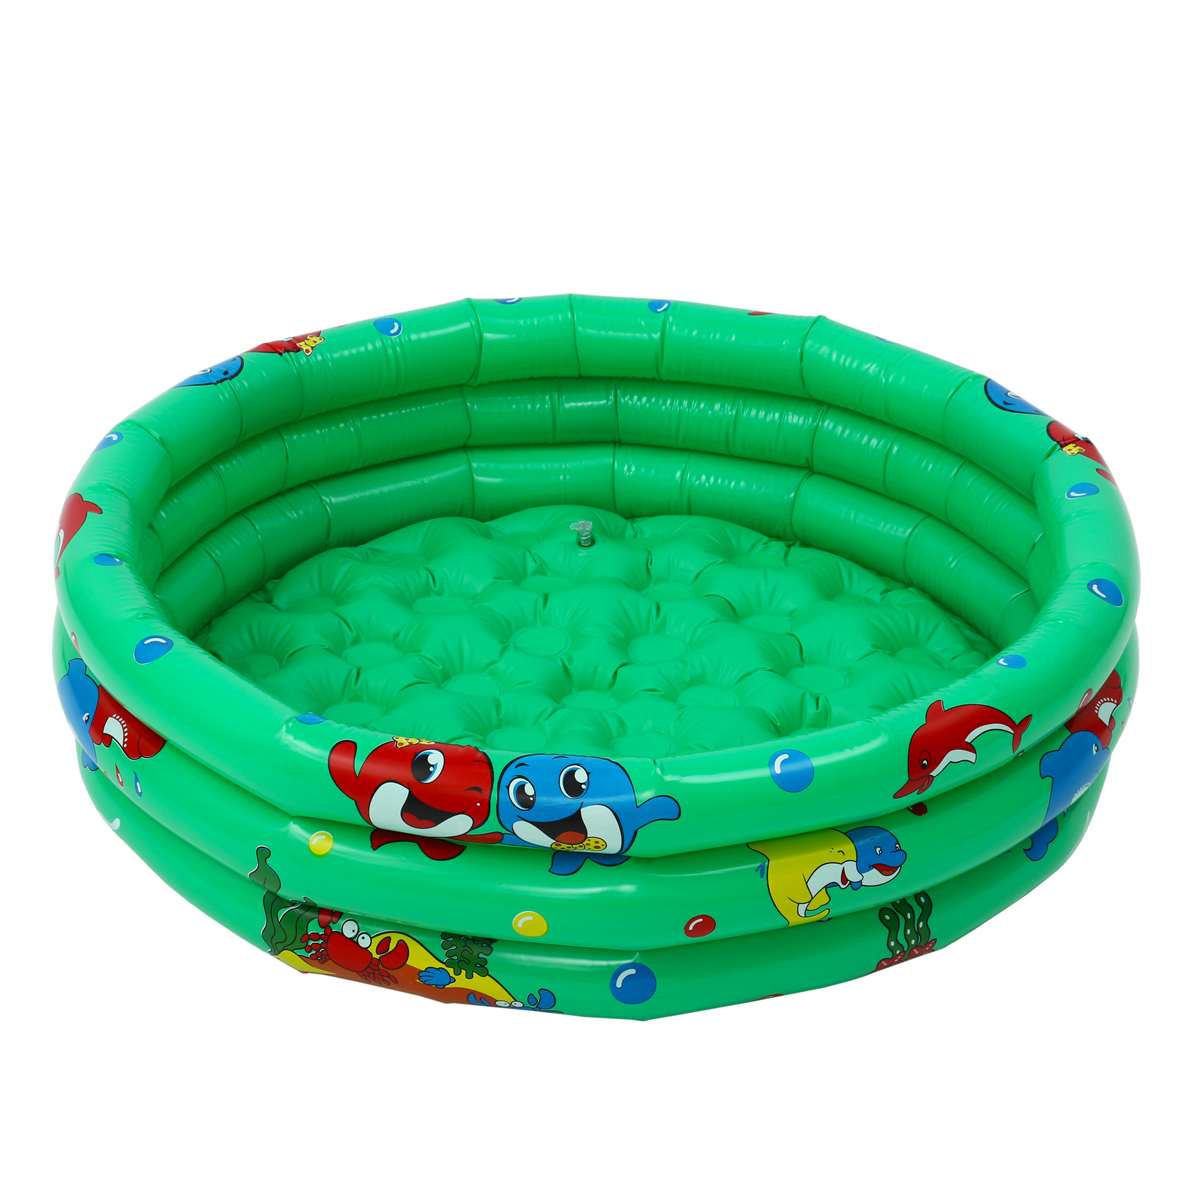 90 x 25cm oppustelig baby swimmingpool piscina bærbar udendørs børnebassin badekar børnepool baby swimmingpool vandkar: Grøn